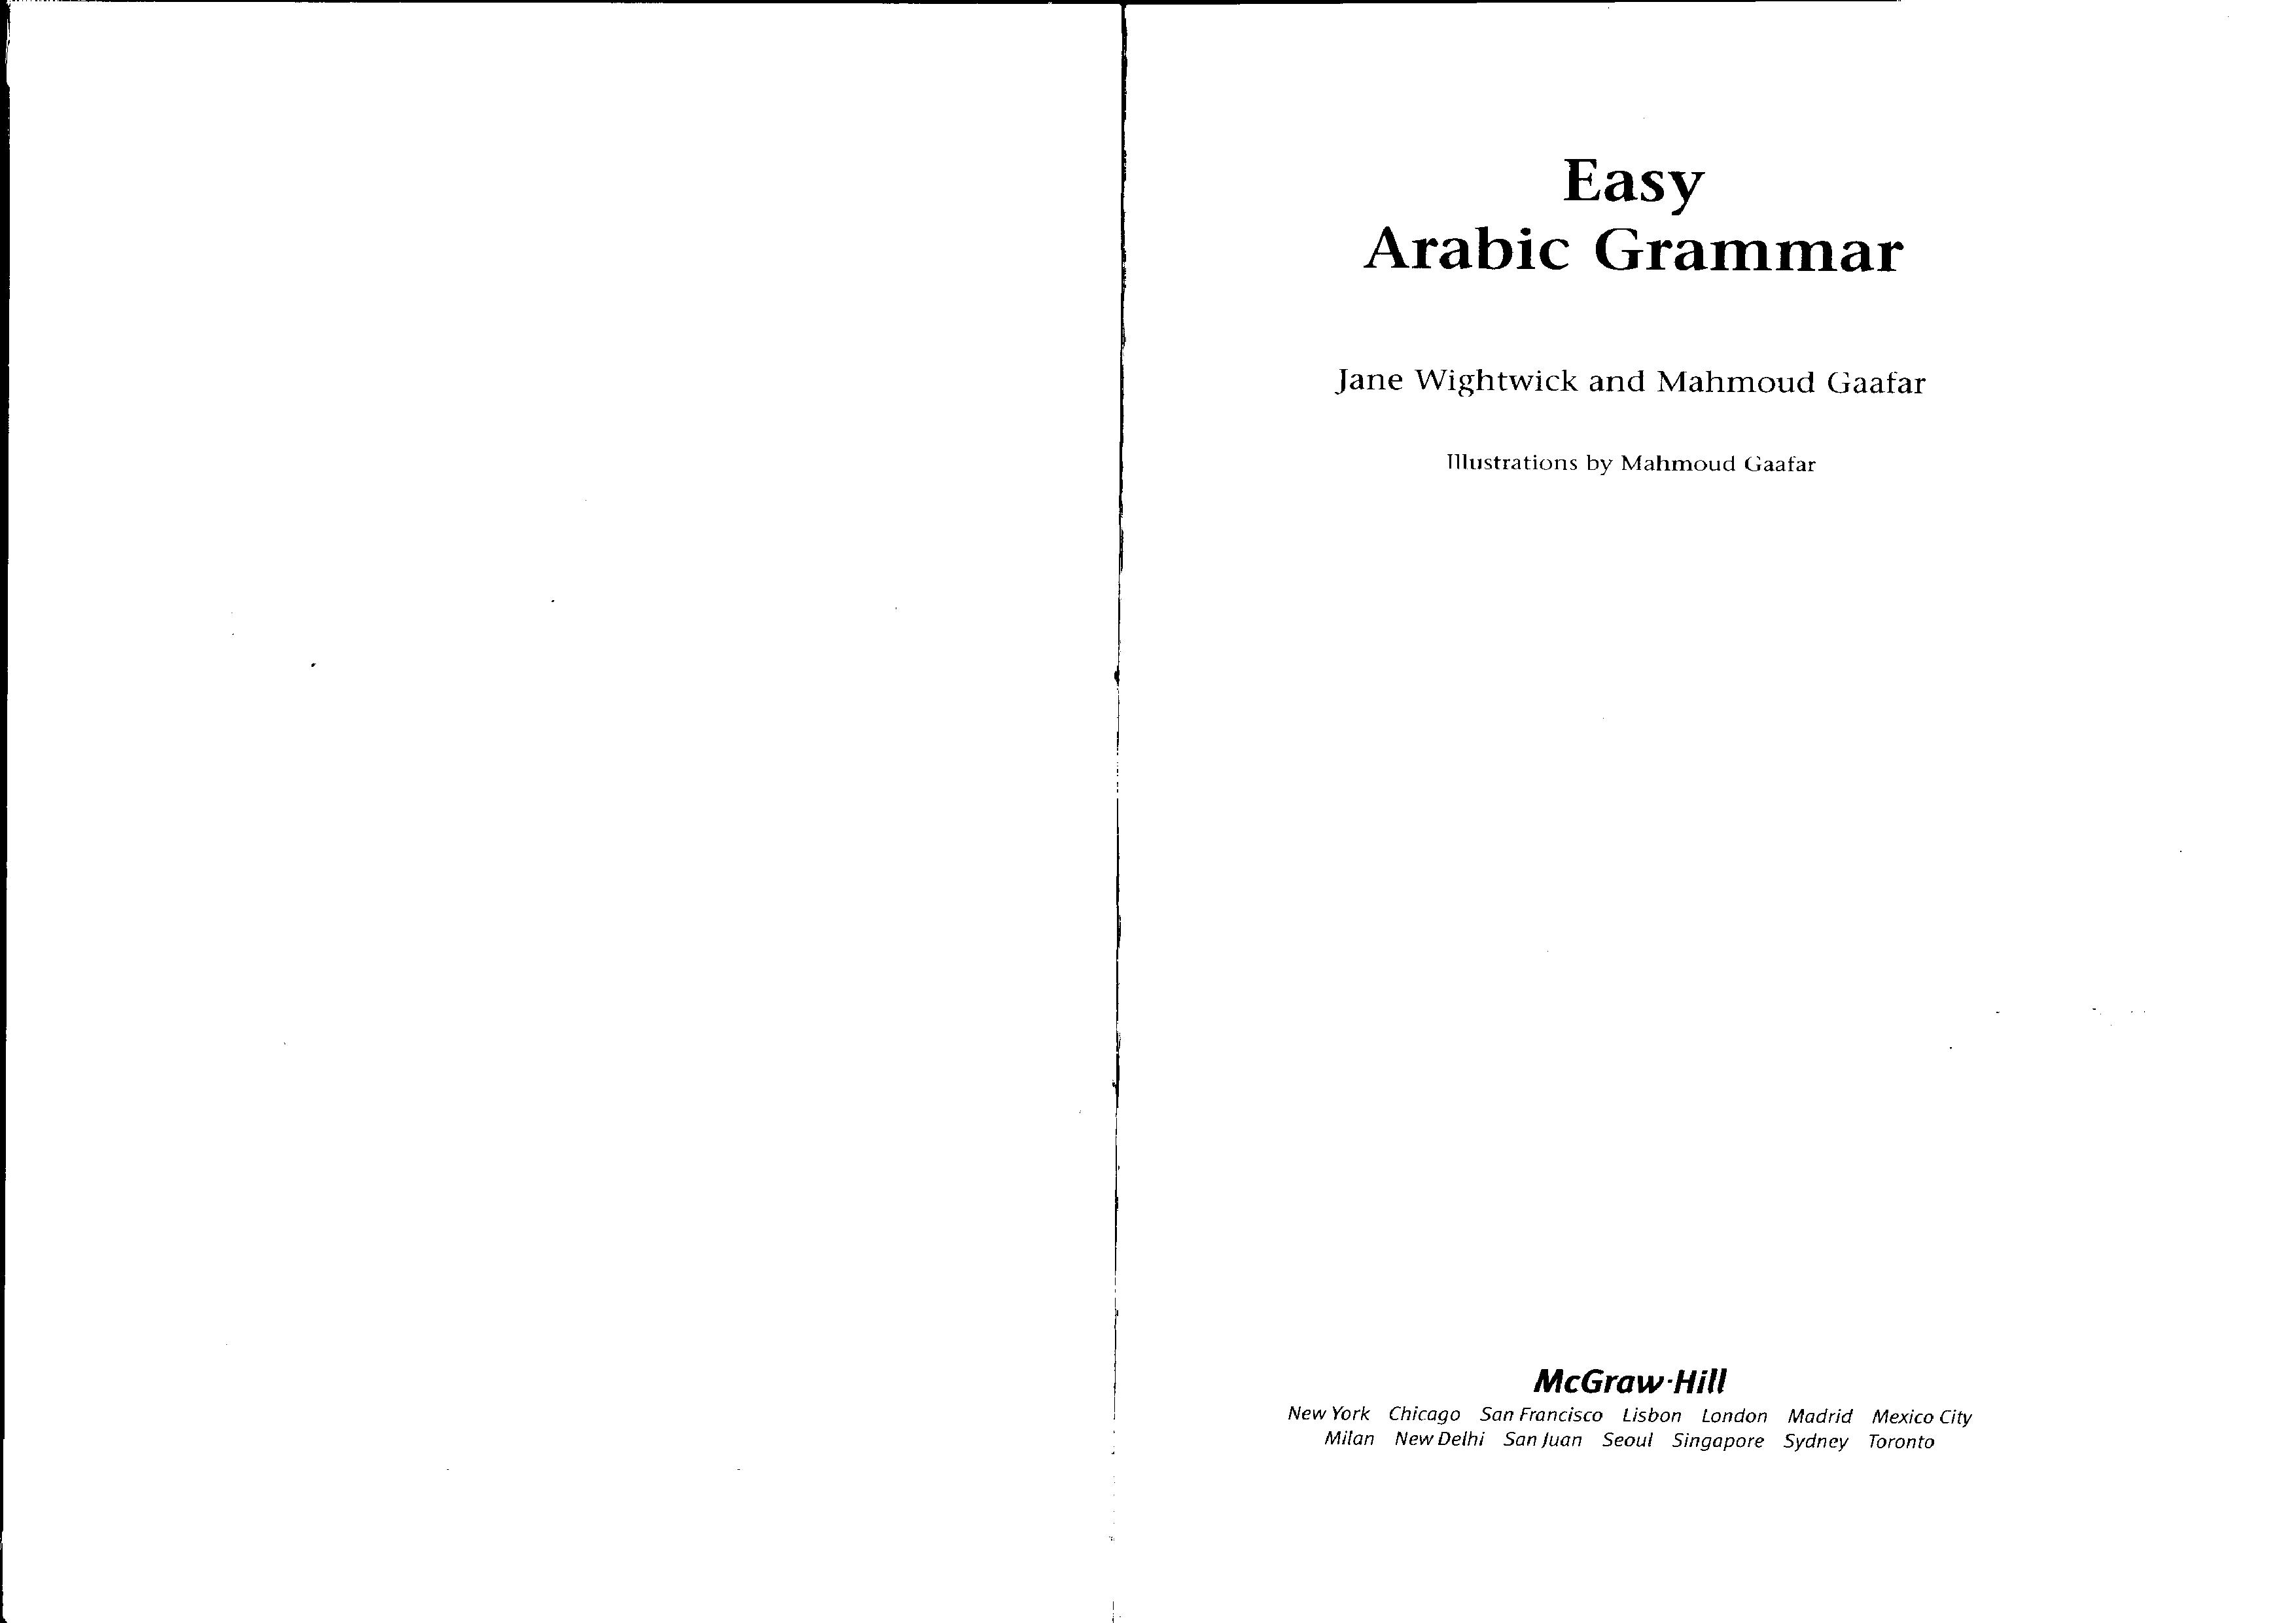 Easy arabic grammar pdf free download acrobat reader download windows 8 free